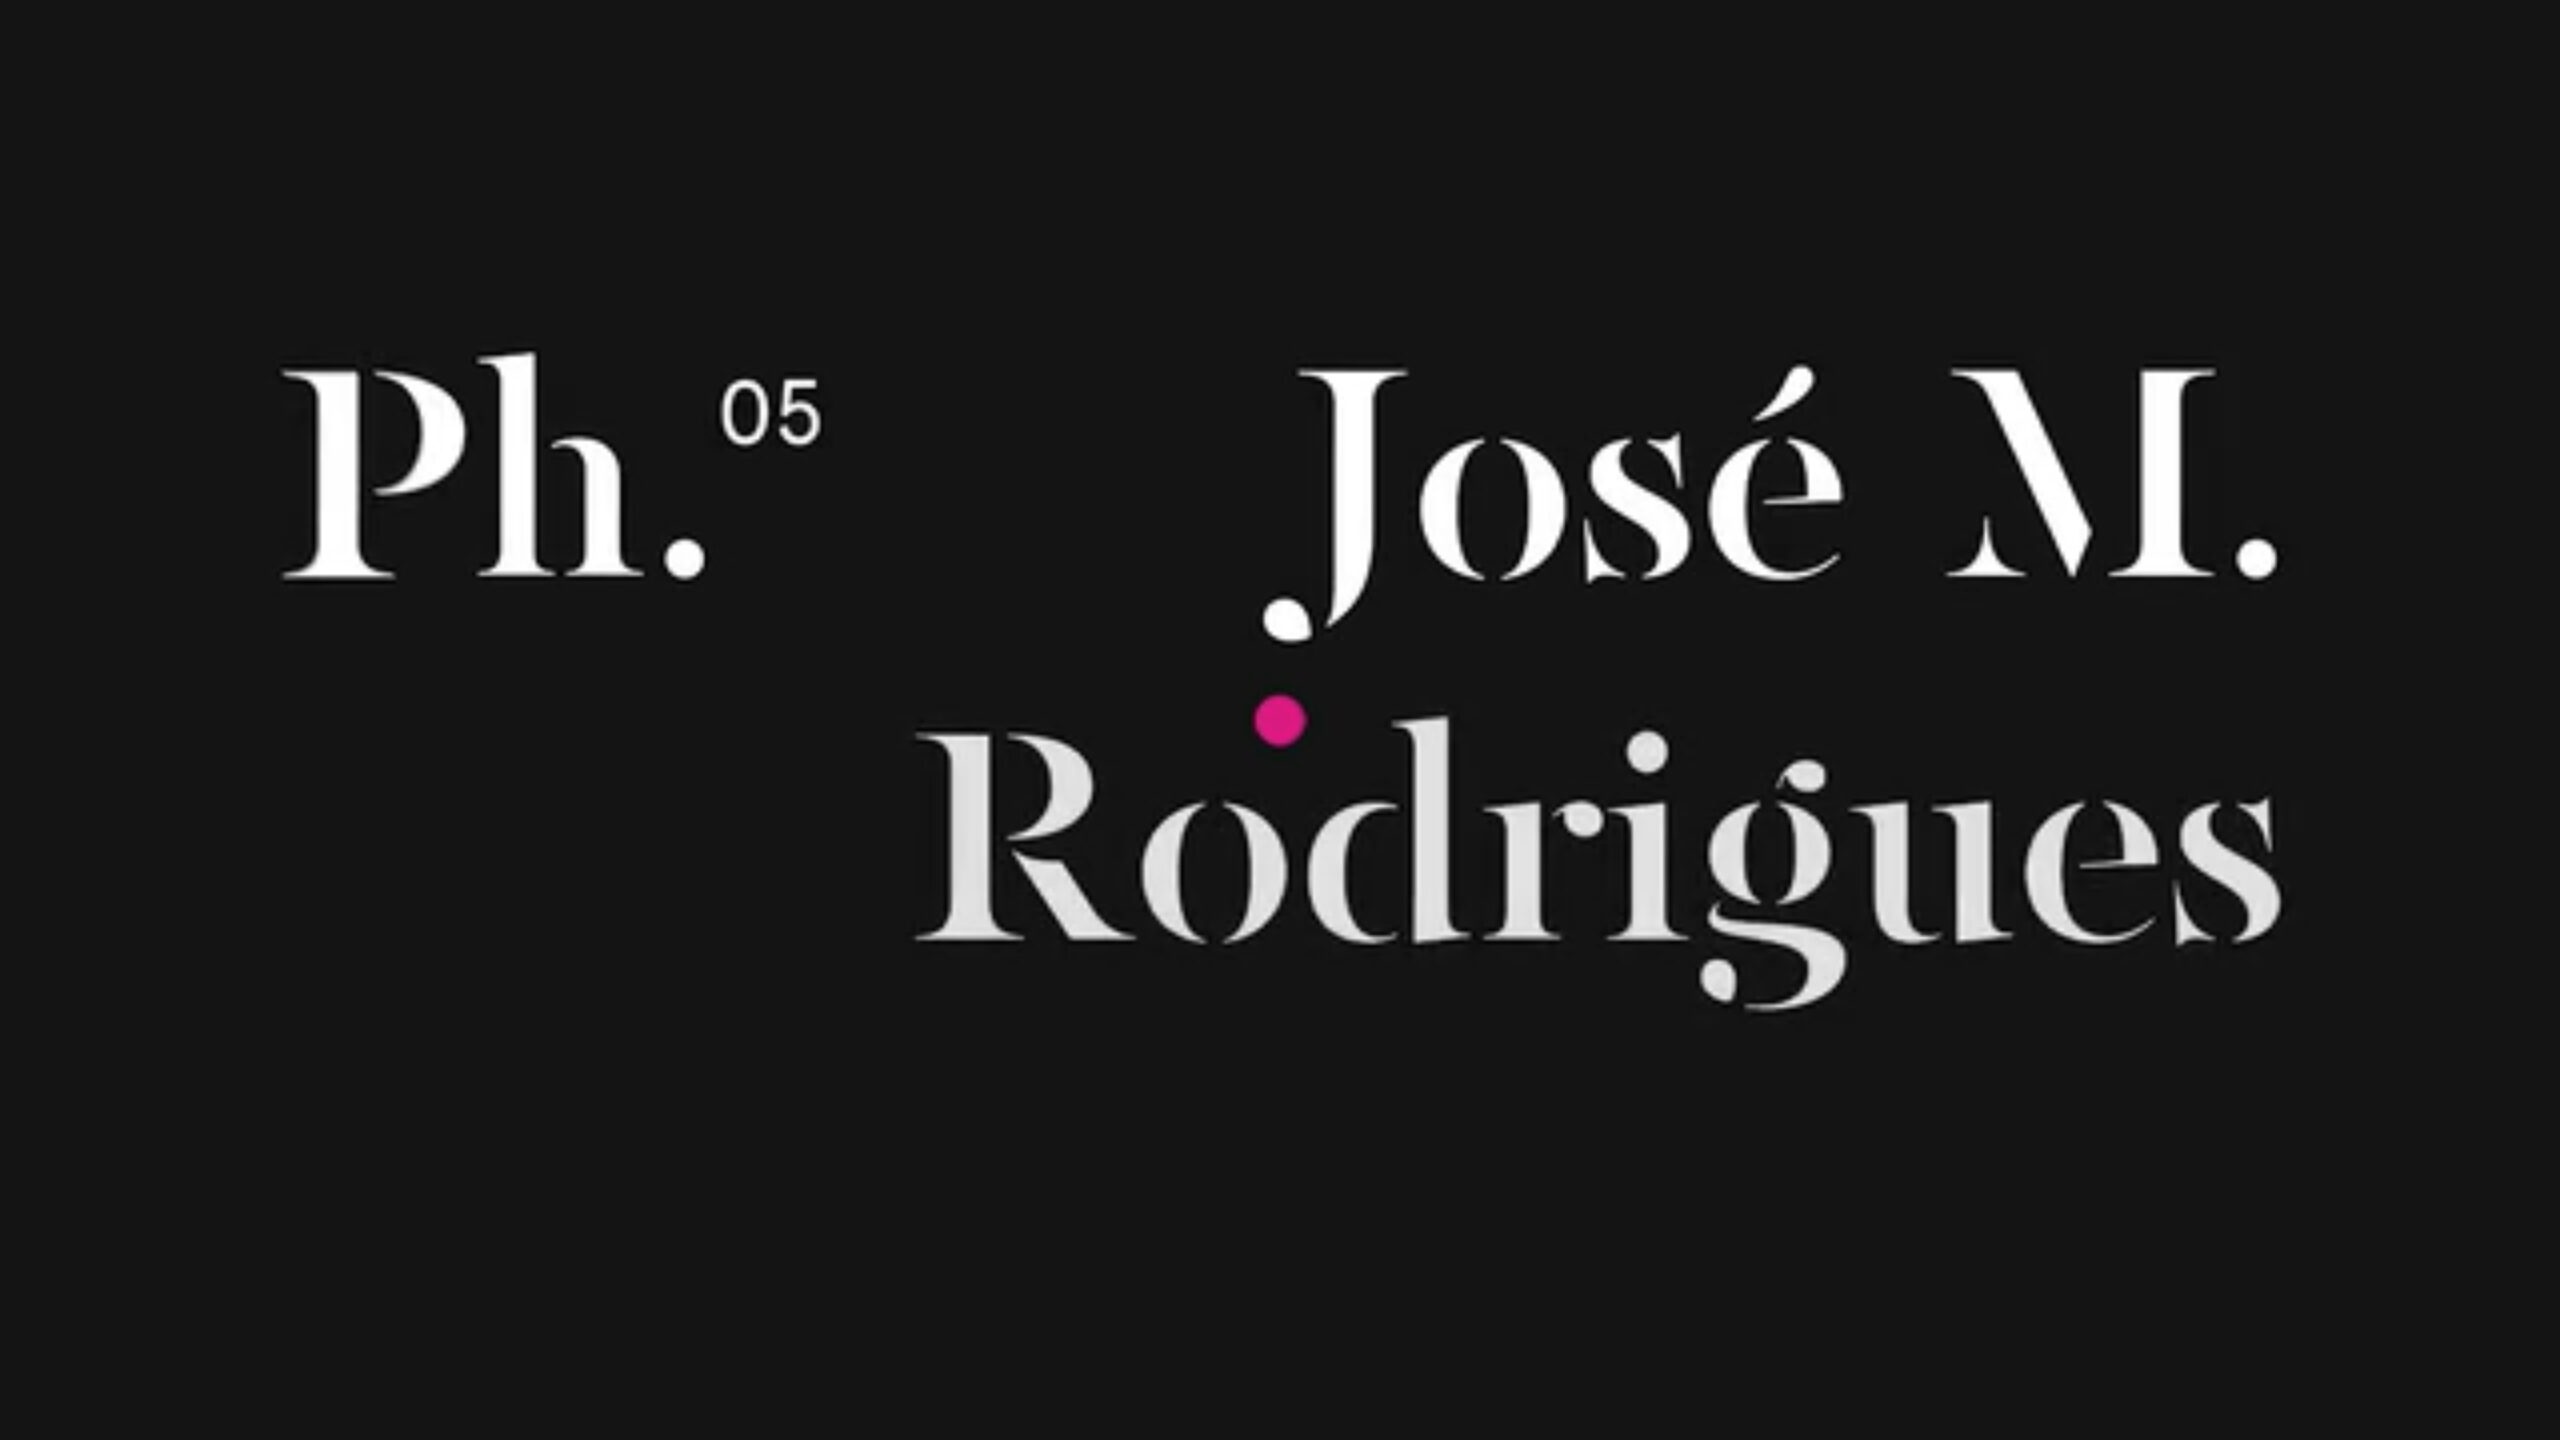 Ph.05 José M. Rodrigues